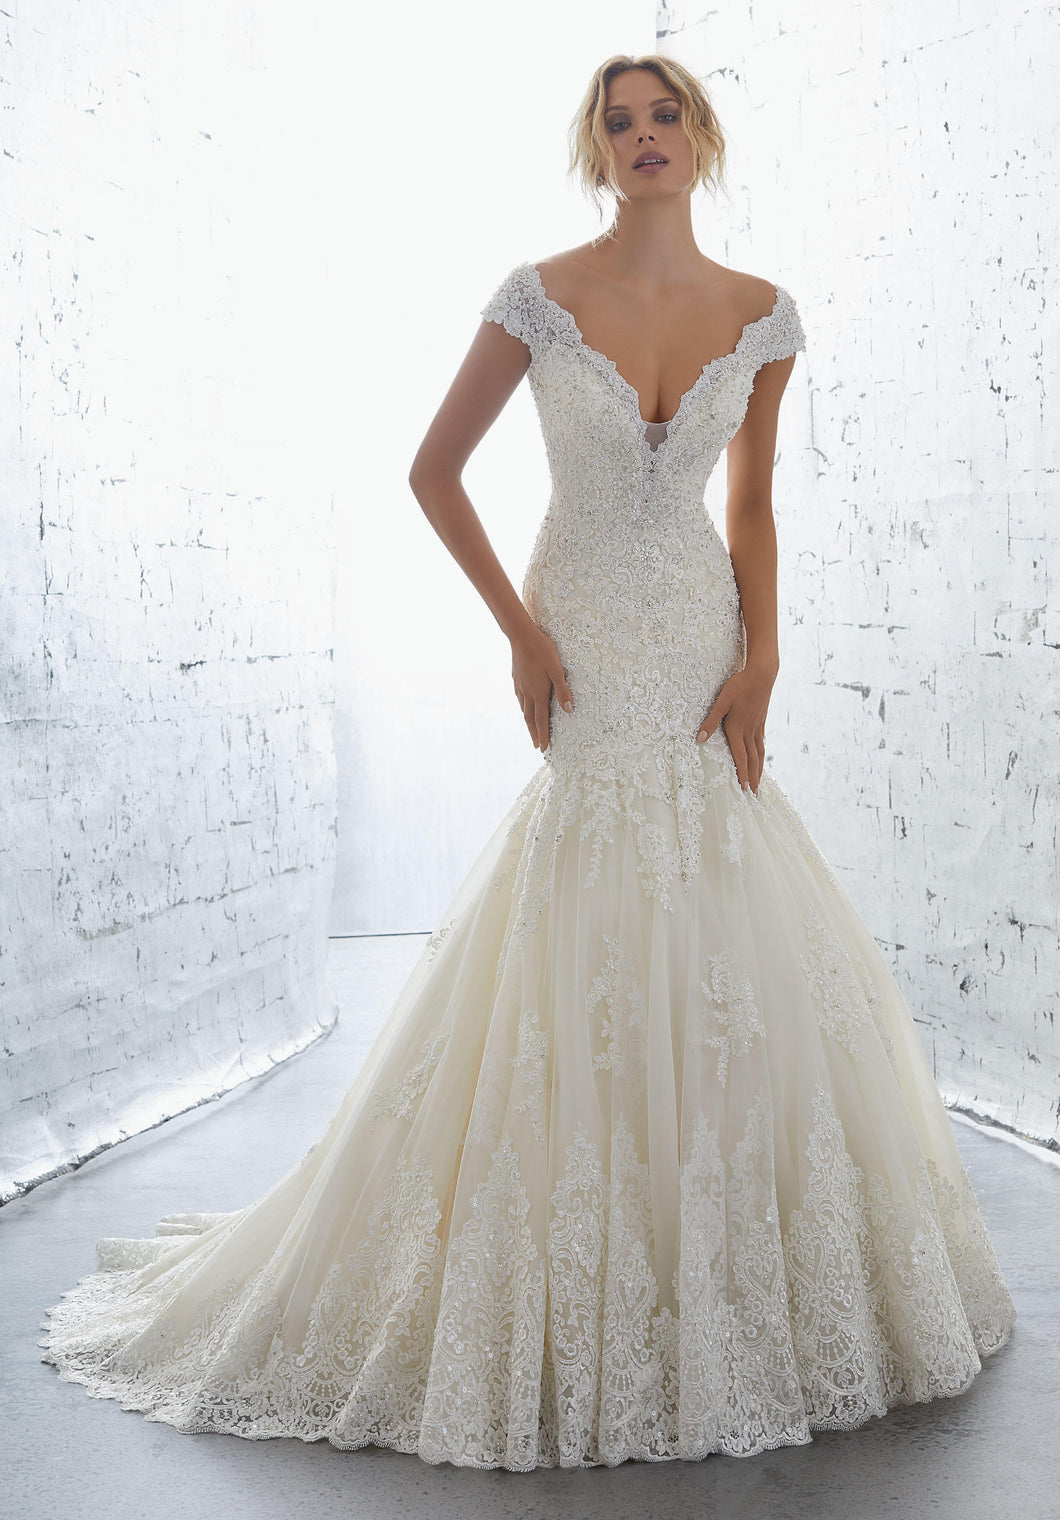 Mori Lee 'Karisma' size 8 used wedding dress front view on model